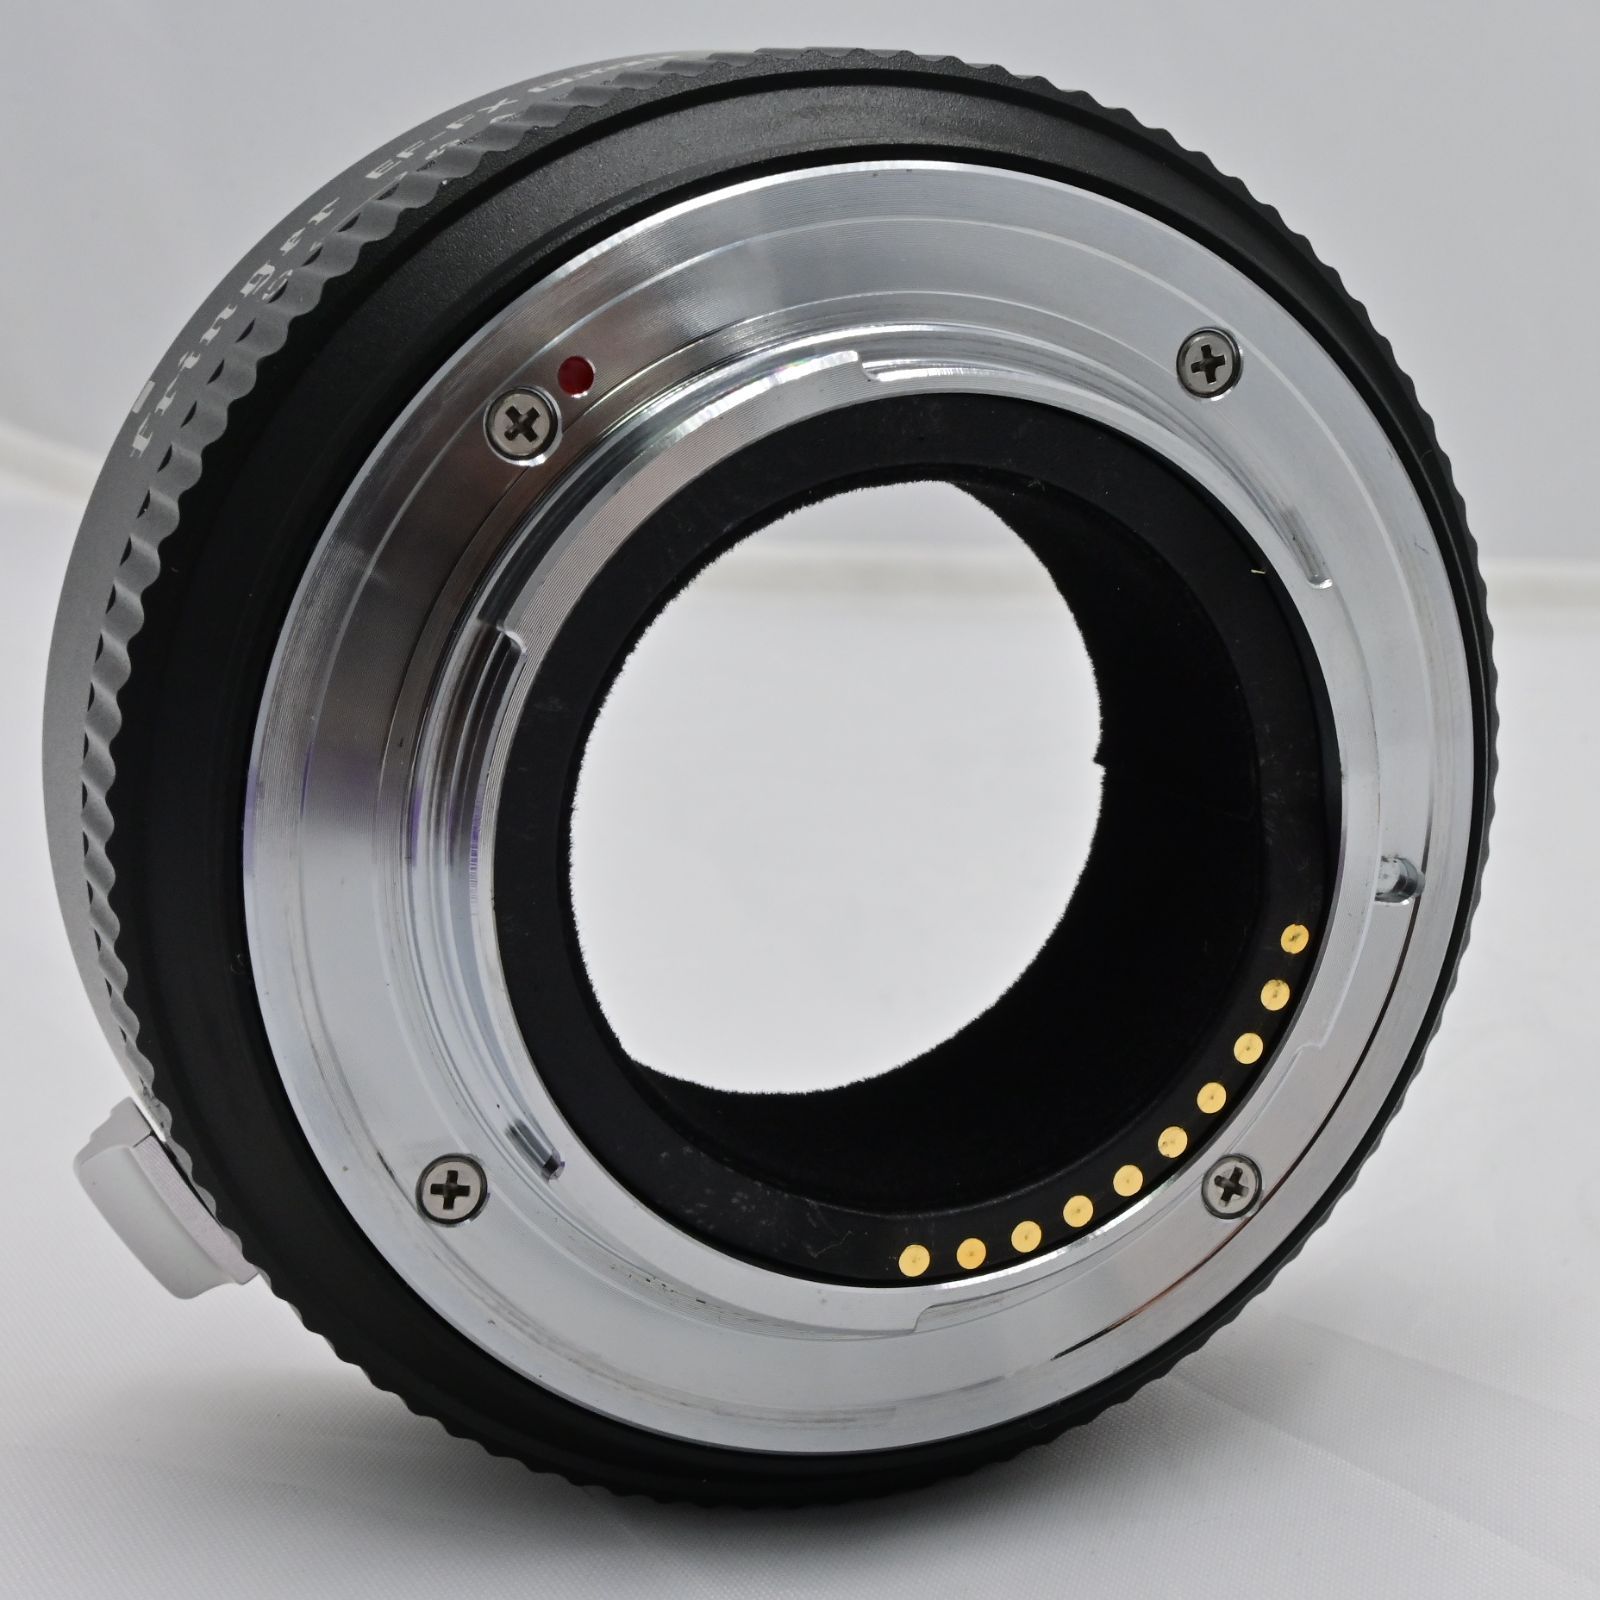 Fringer EF-FX PRO II Fuji オートフォーカスマウントアダプター 内蔵電子絞り自動対応 Canon EOS EFレンズ  Fujifilm X-Mount グッチーカメラ メルカリ